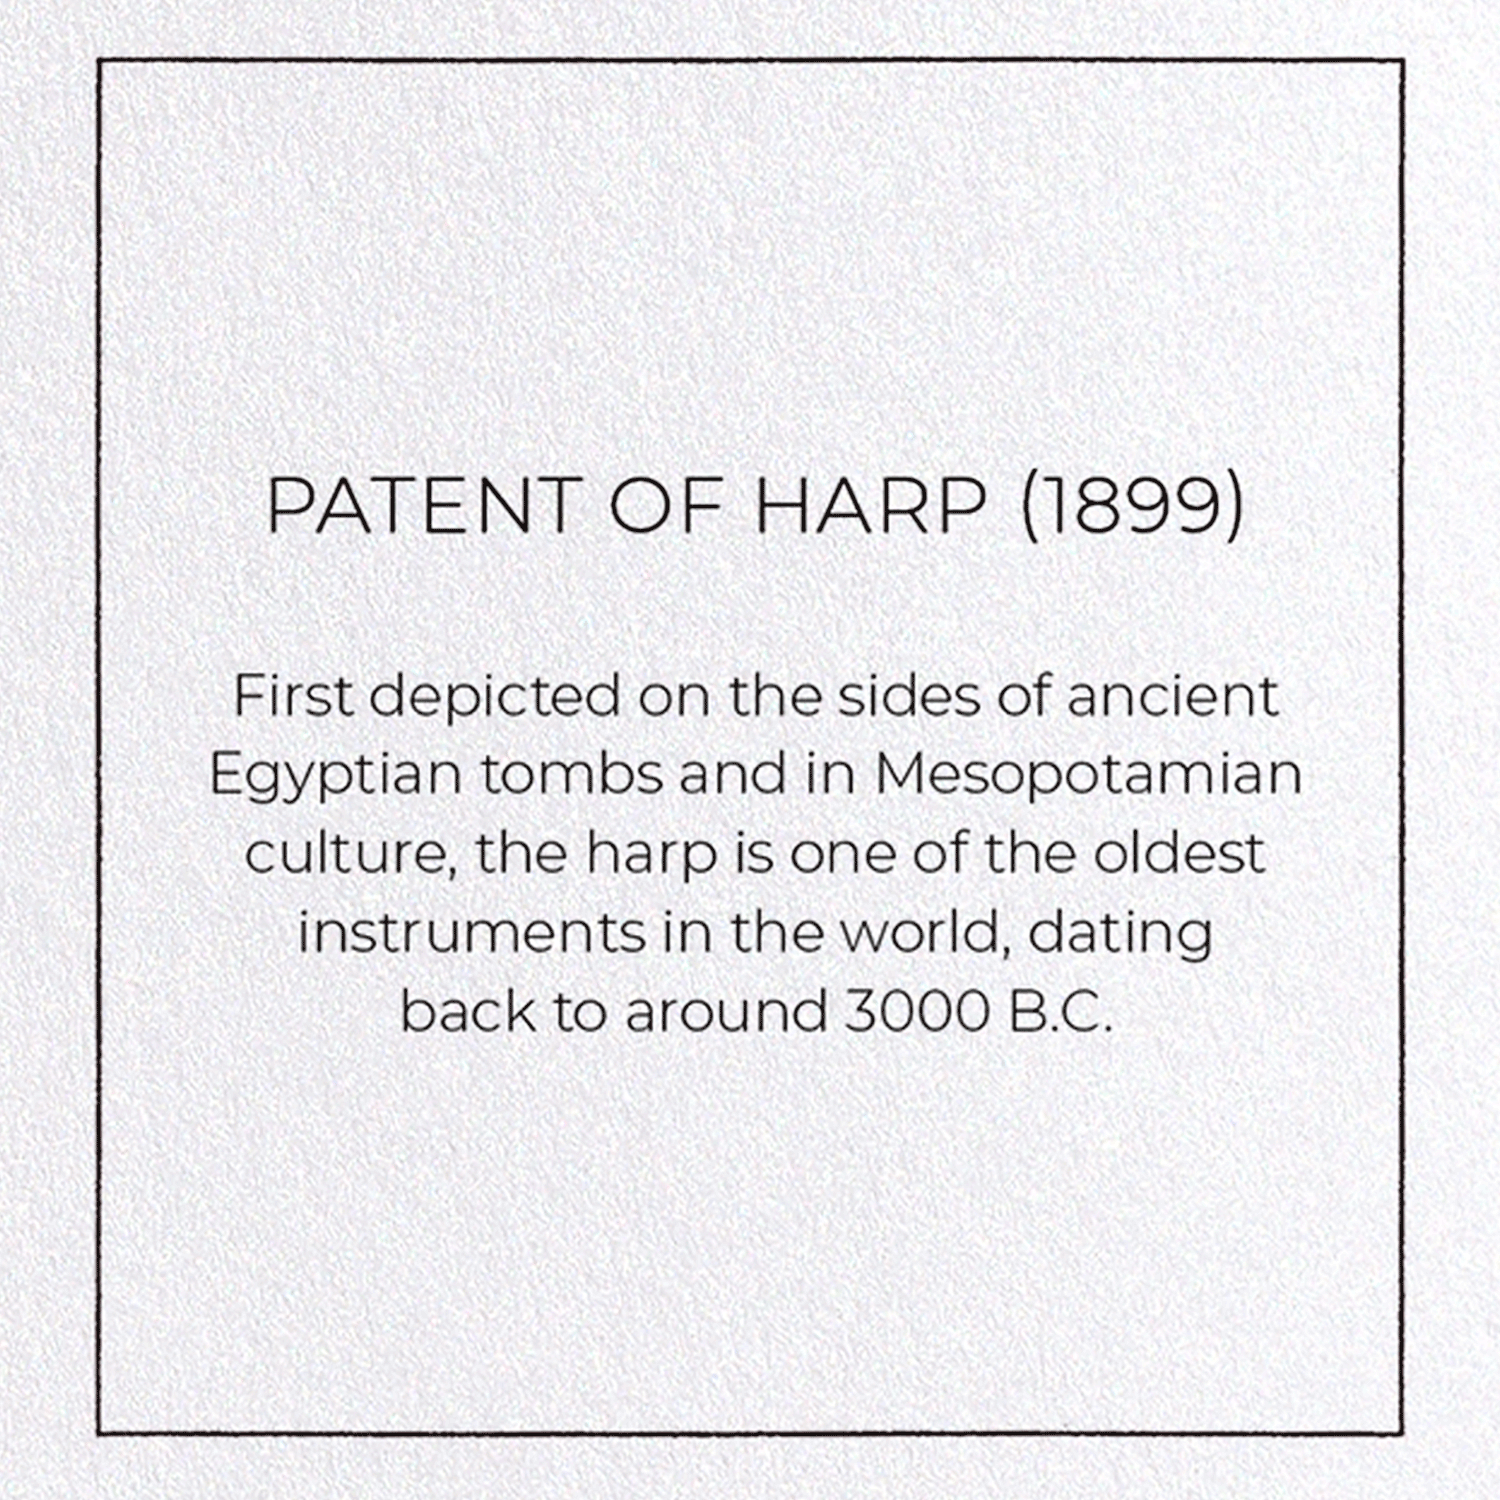 PATENT OF HARP (1899)